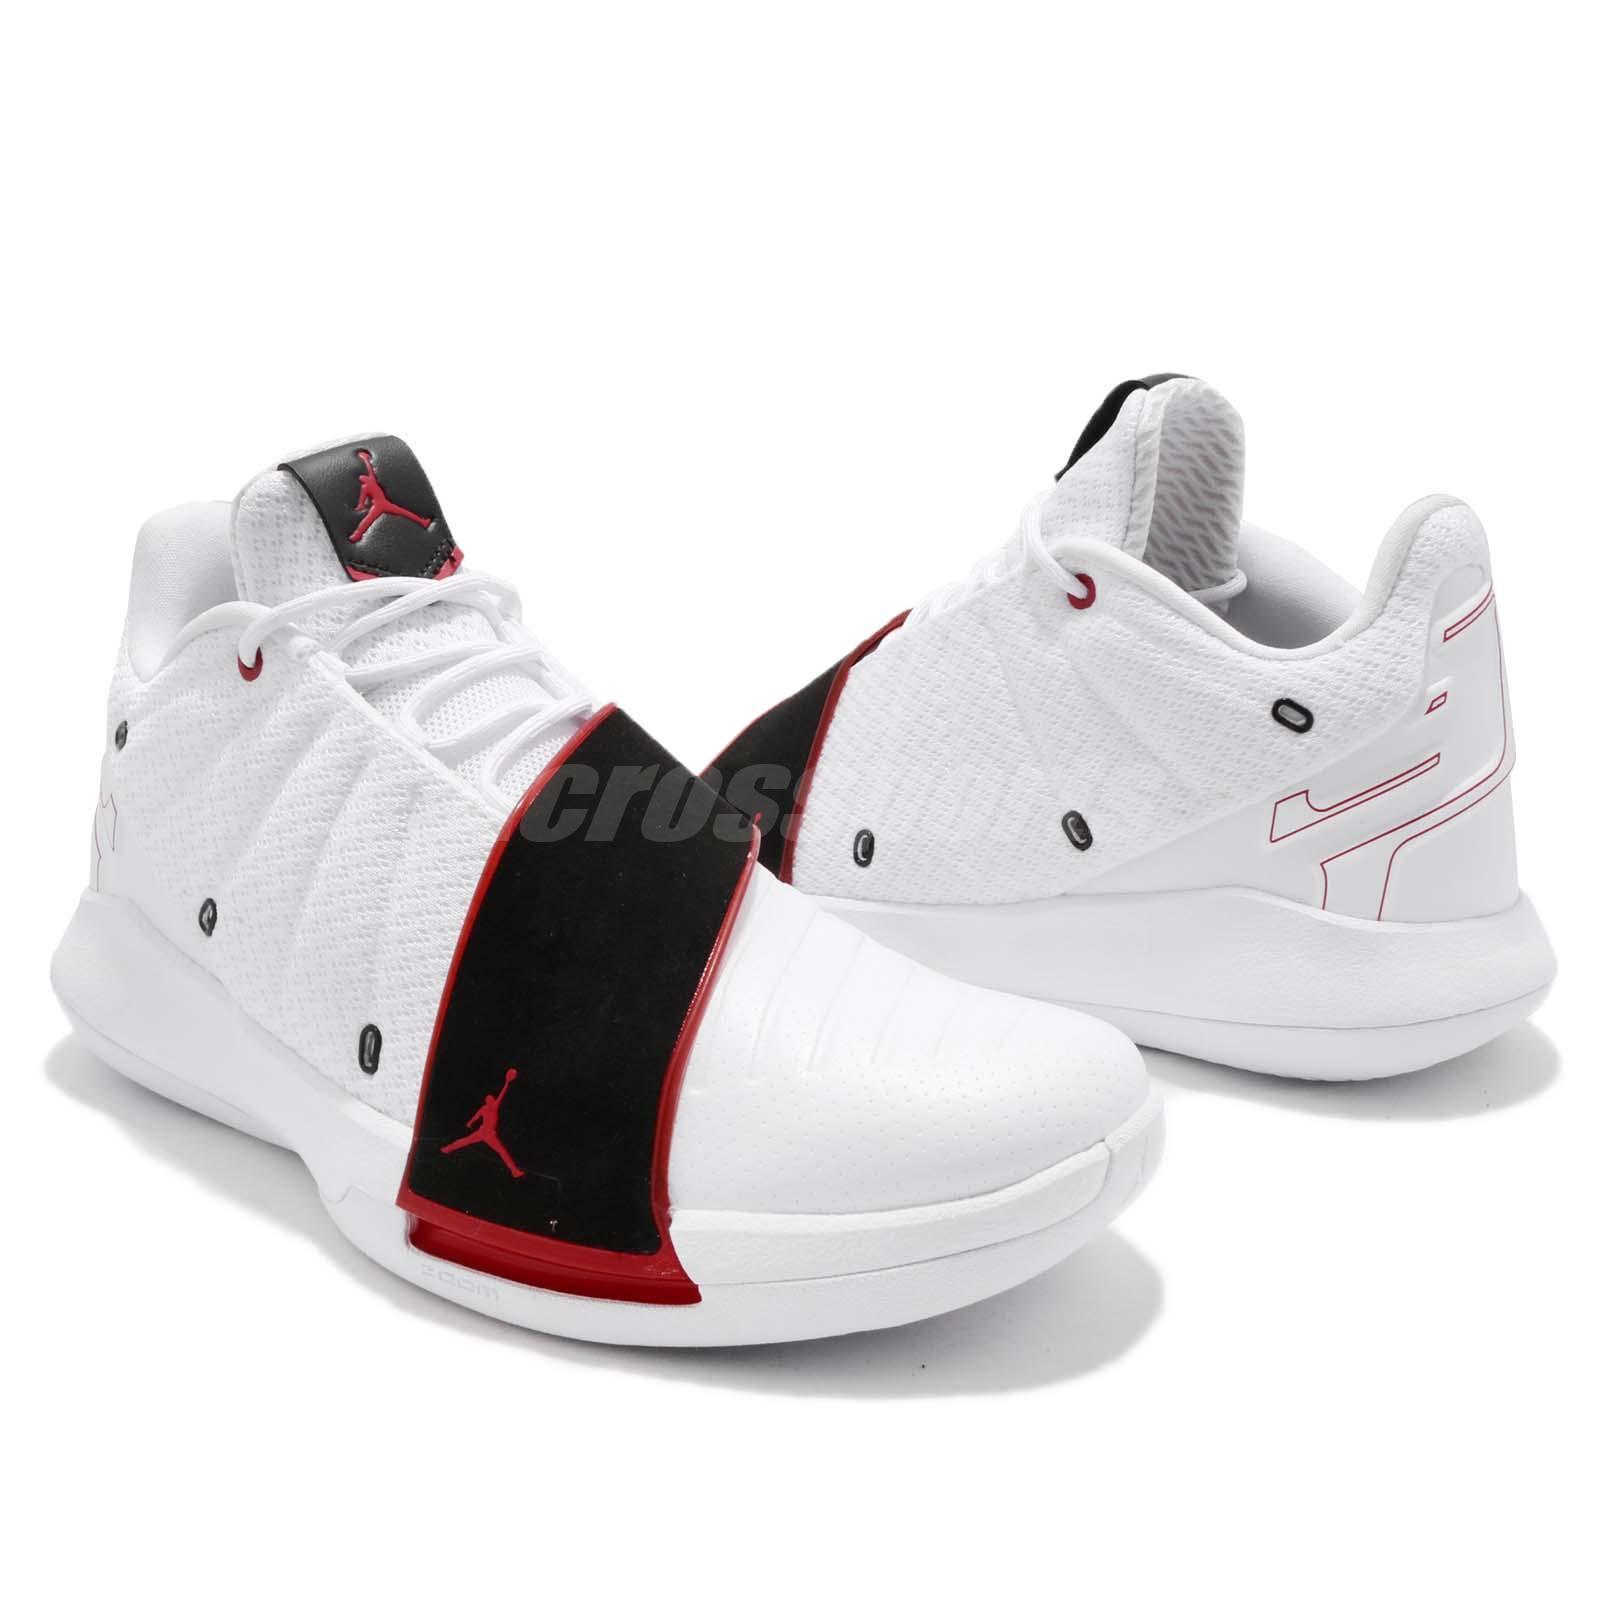 Chris Paul's Jordan CP3.XI Drops Overseas in Colorway - WearTesters